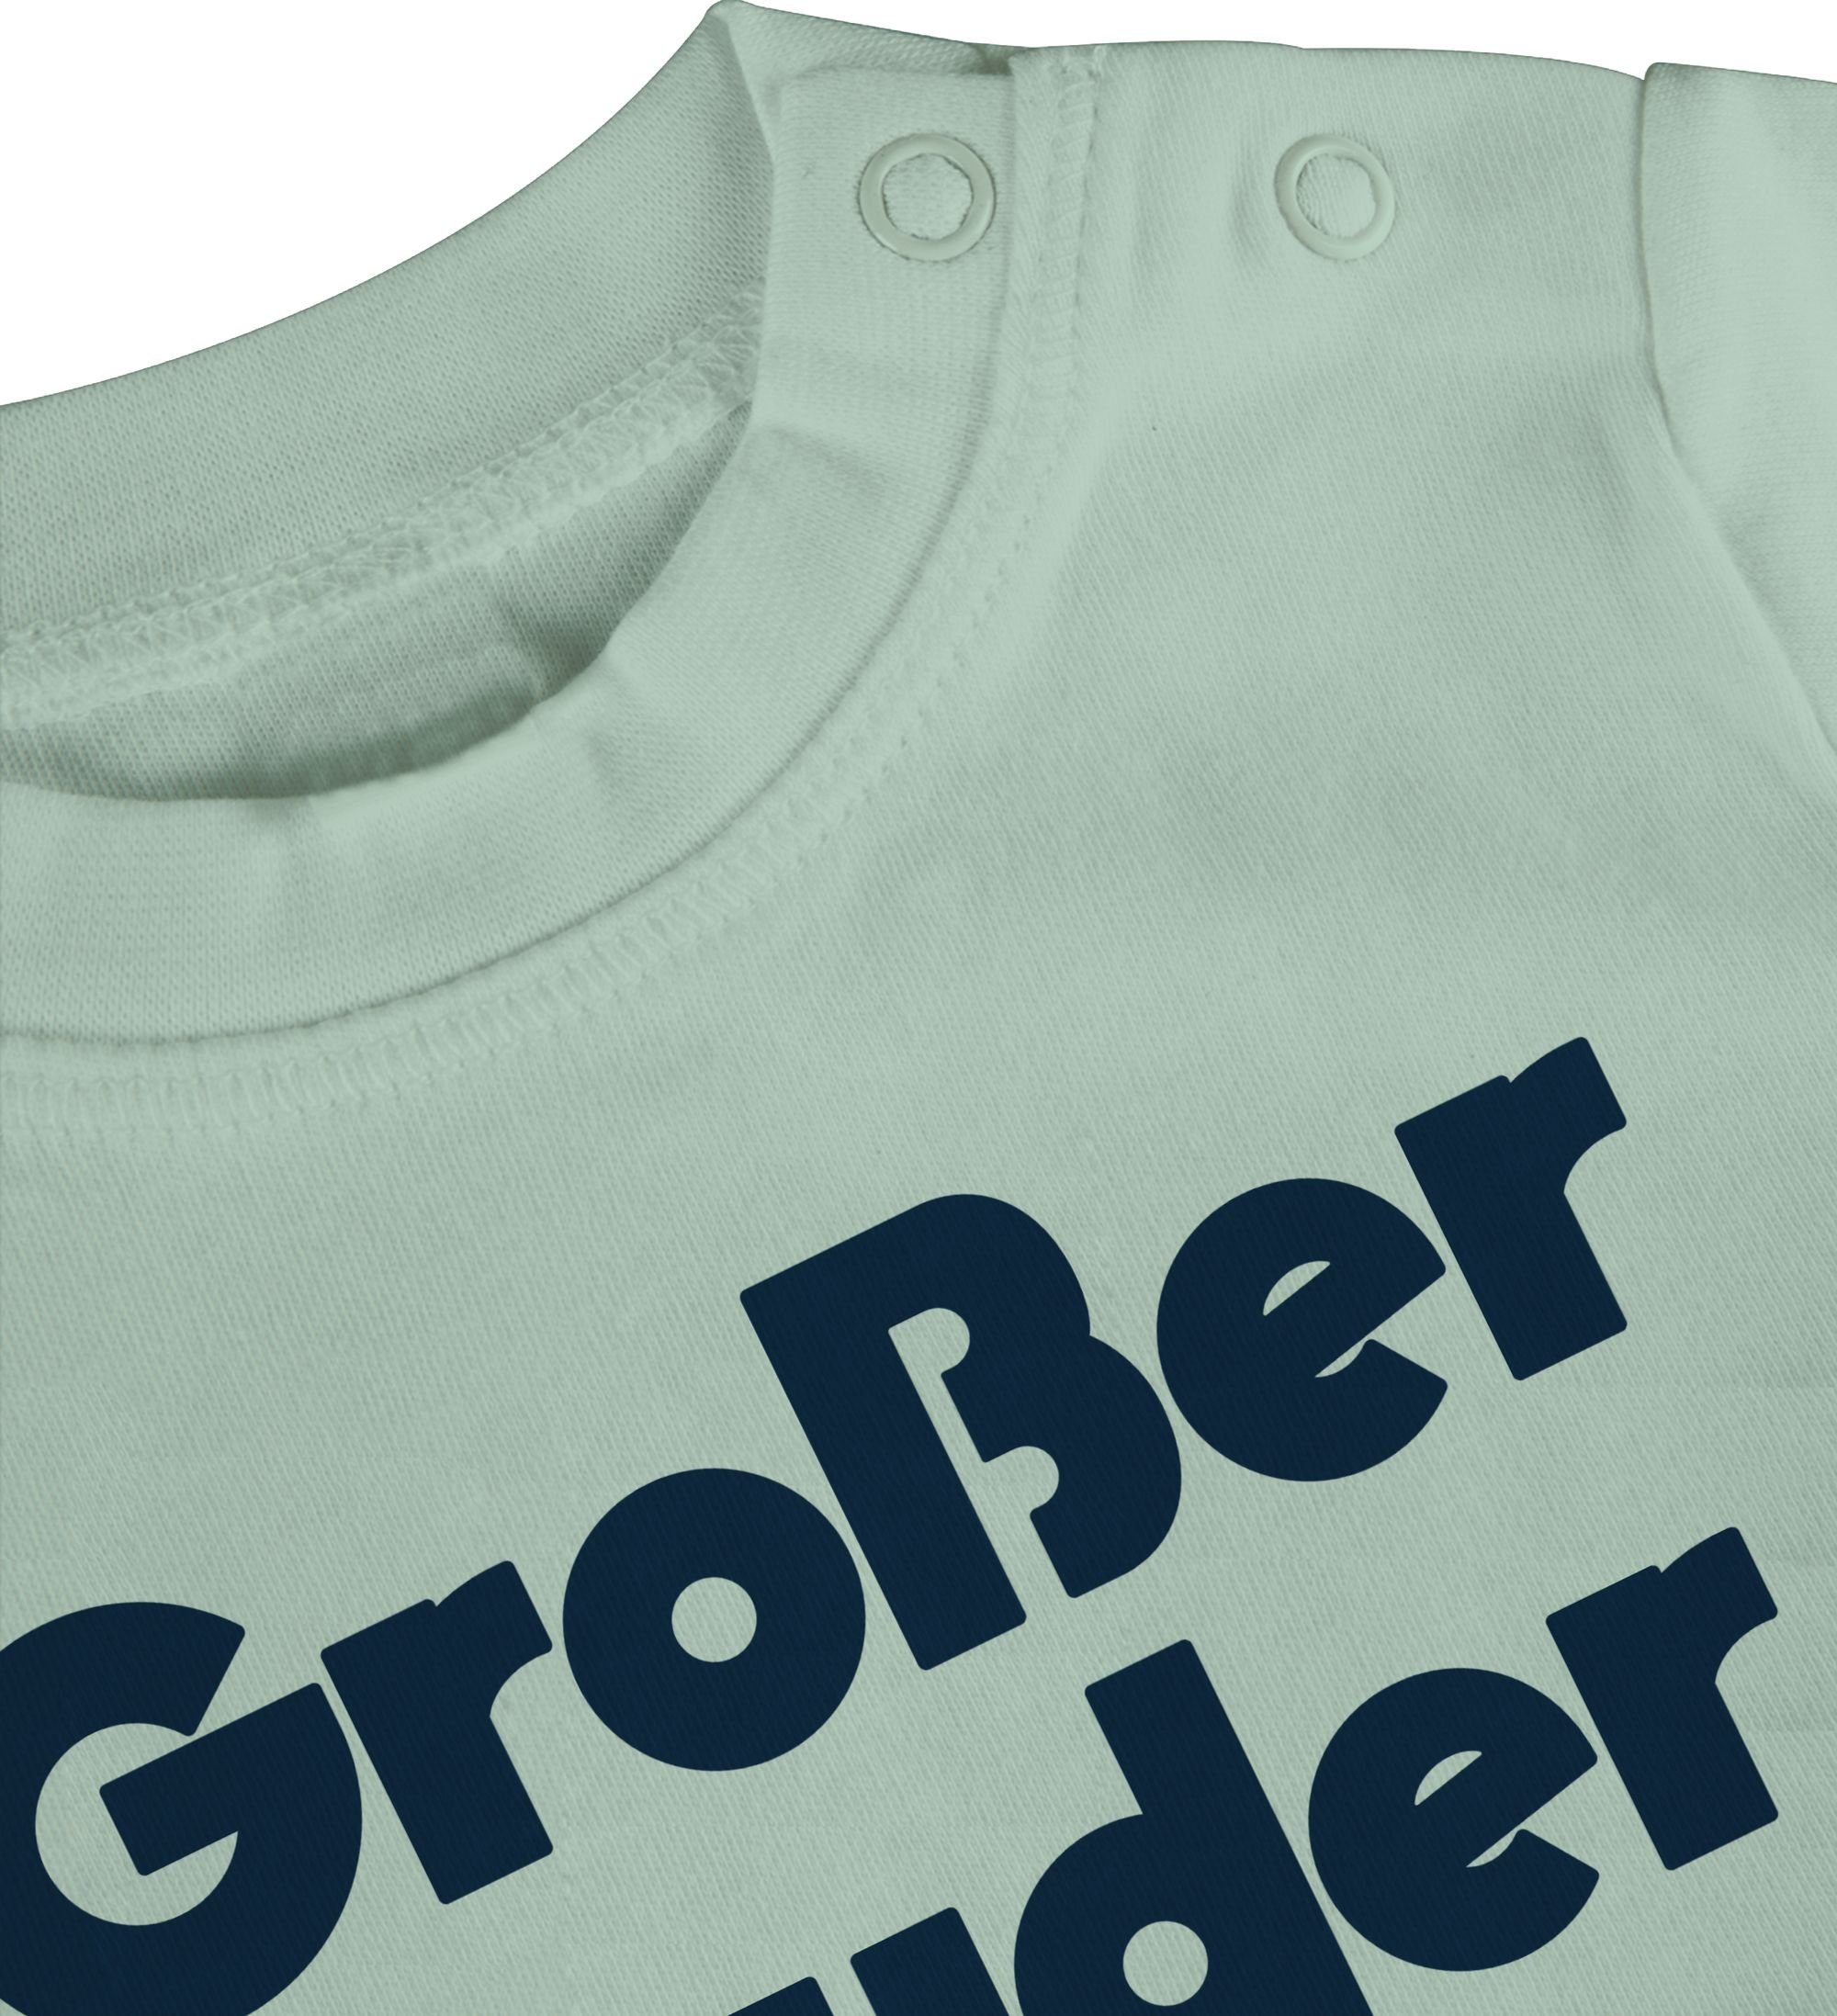 Shirtracer T-Shirt Großer Bruder 2024 1 Mintgrün Großer Bruder Fuchs